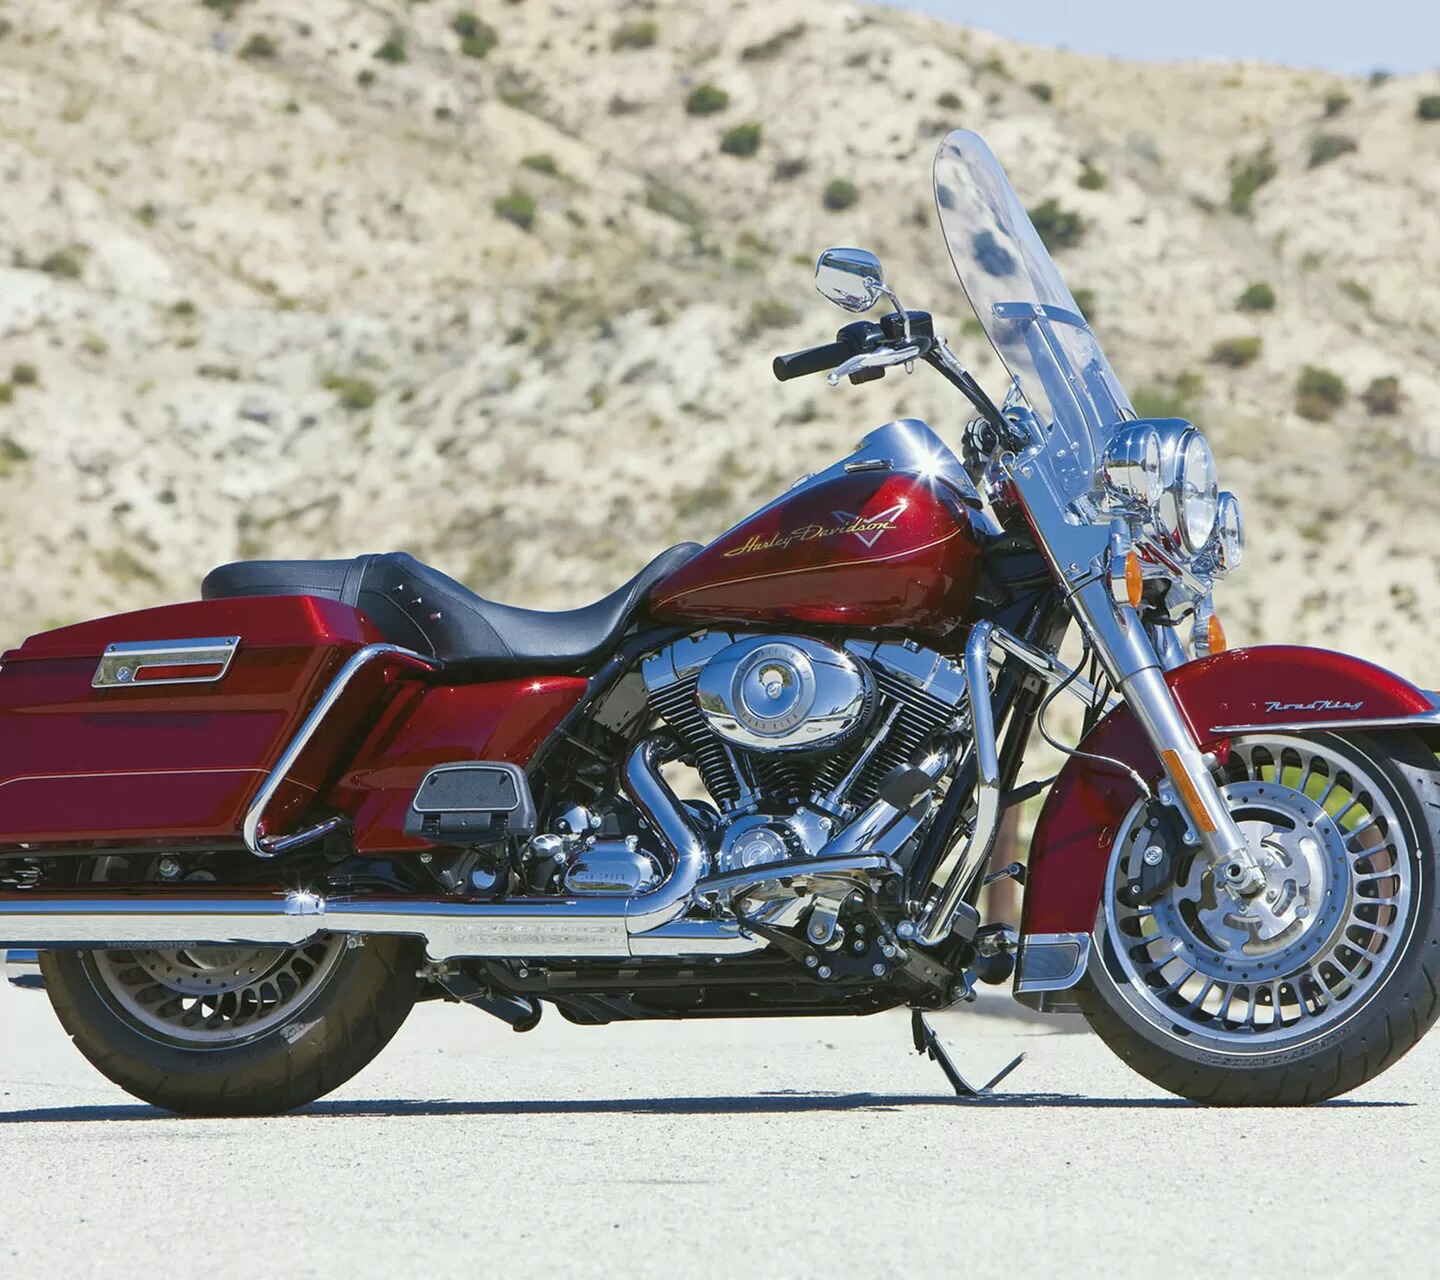 Harley Davidson——黑色酷炫摩托车 - 普象网